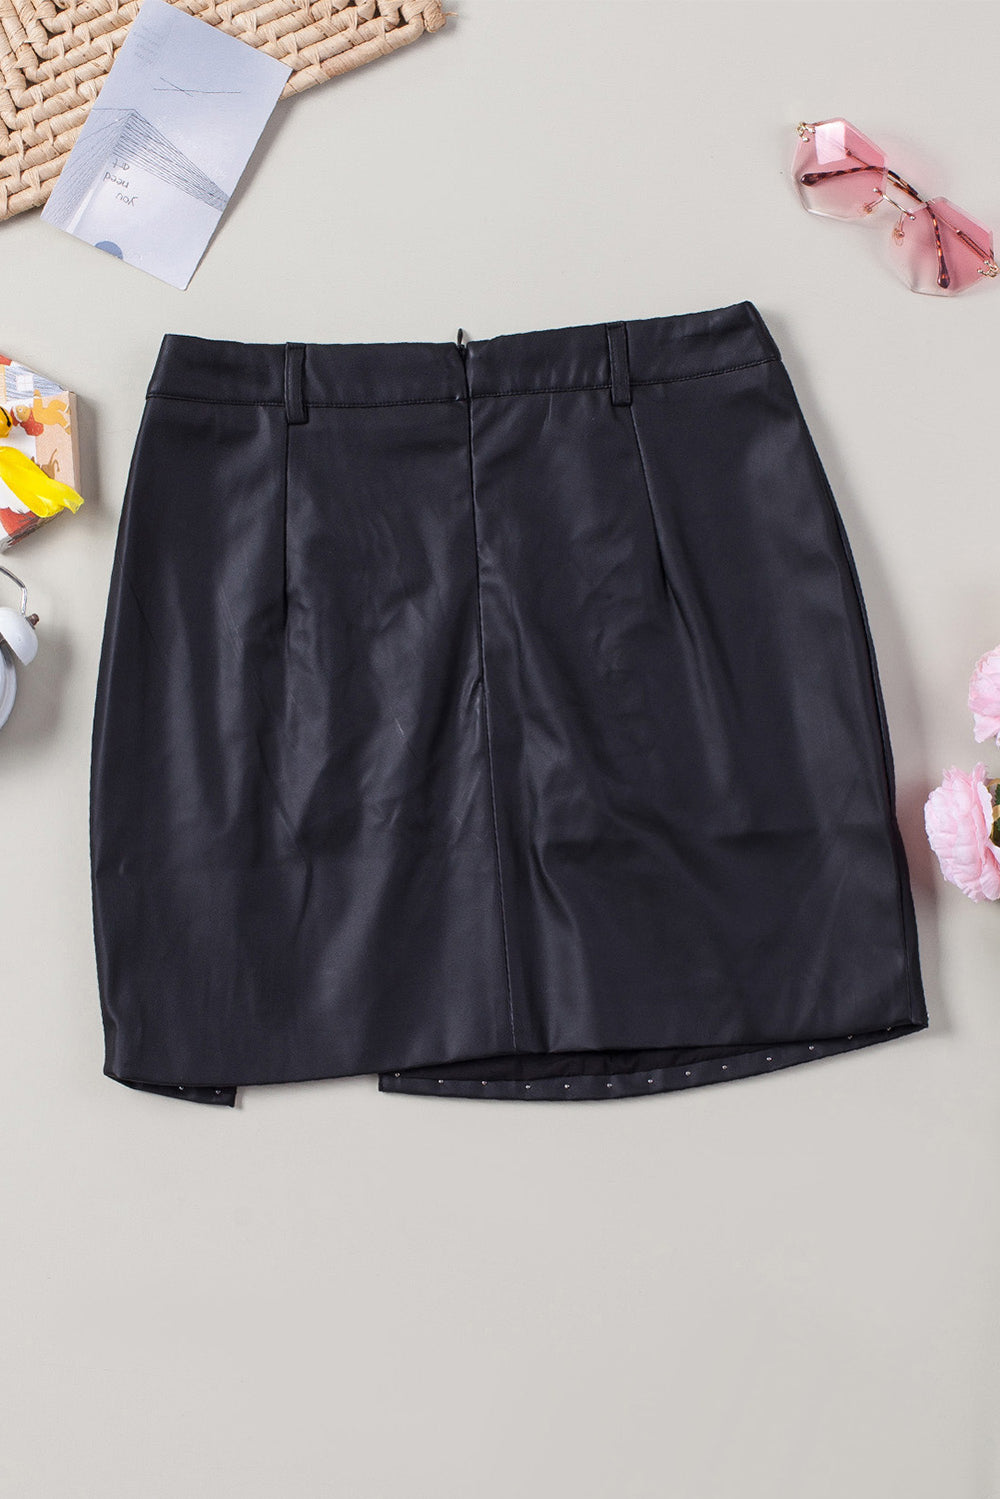 Women's Faux Leather Beaded Side Slit High Waist Mini Skirt Image 2